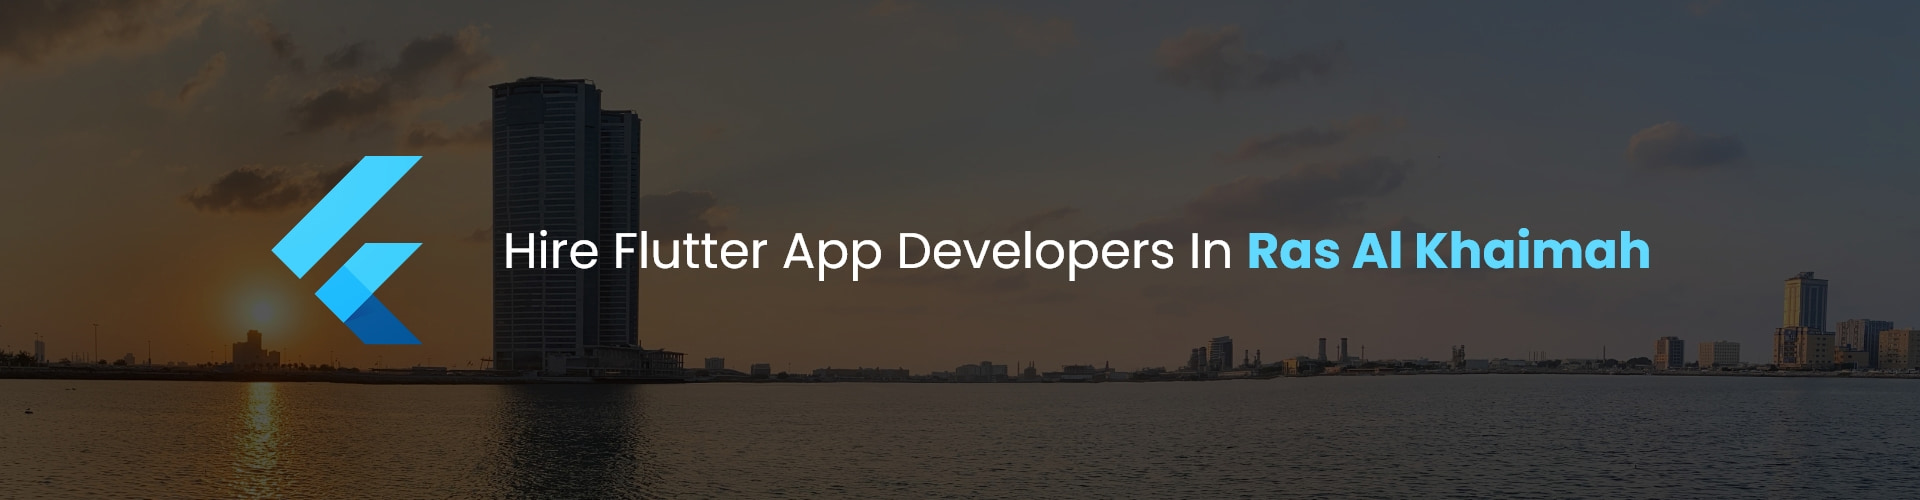 hire flutter app developers in ras al khaimah